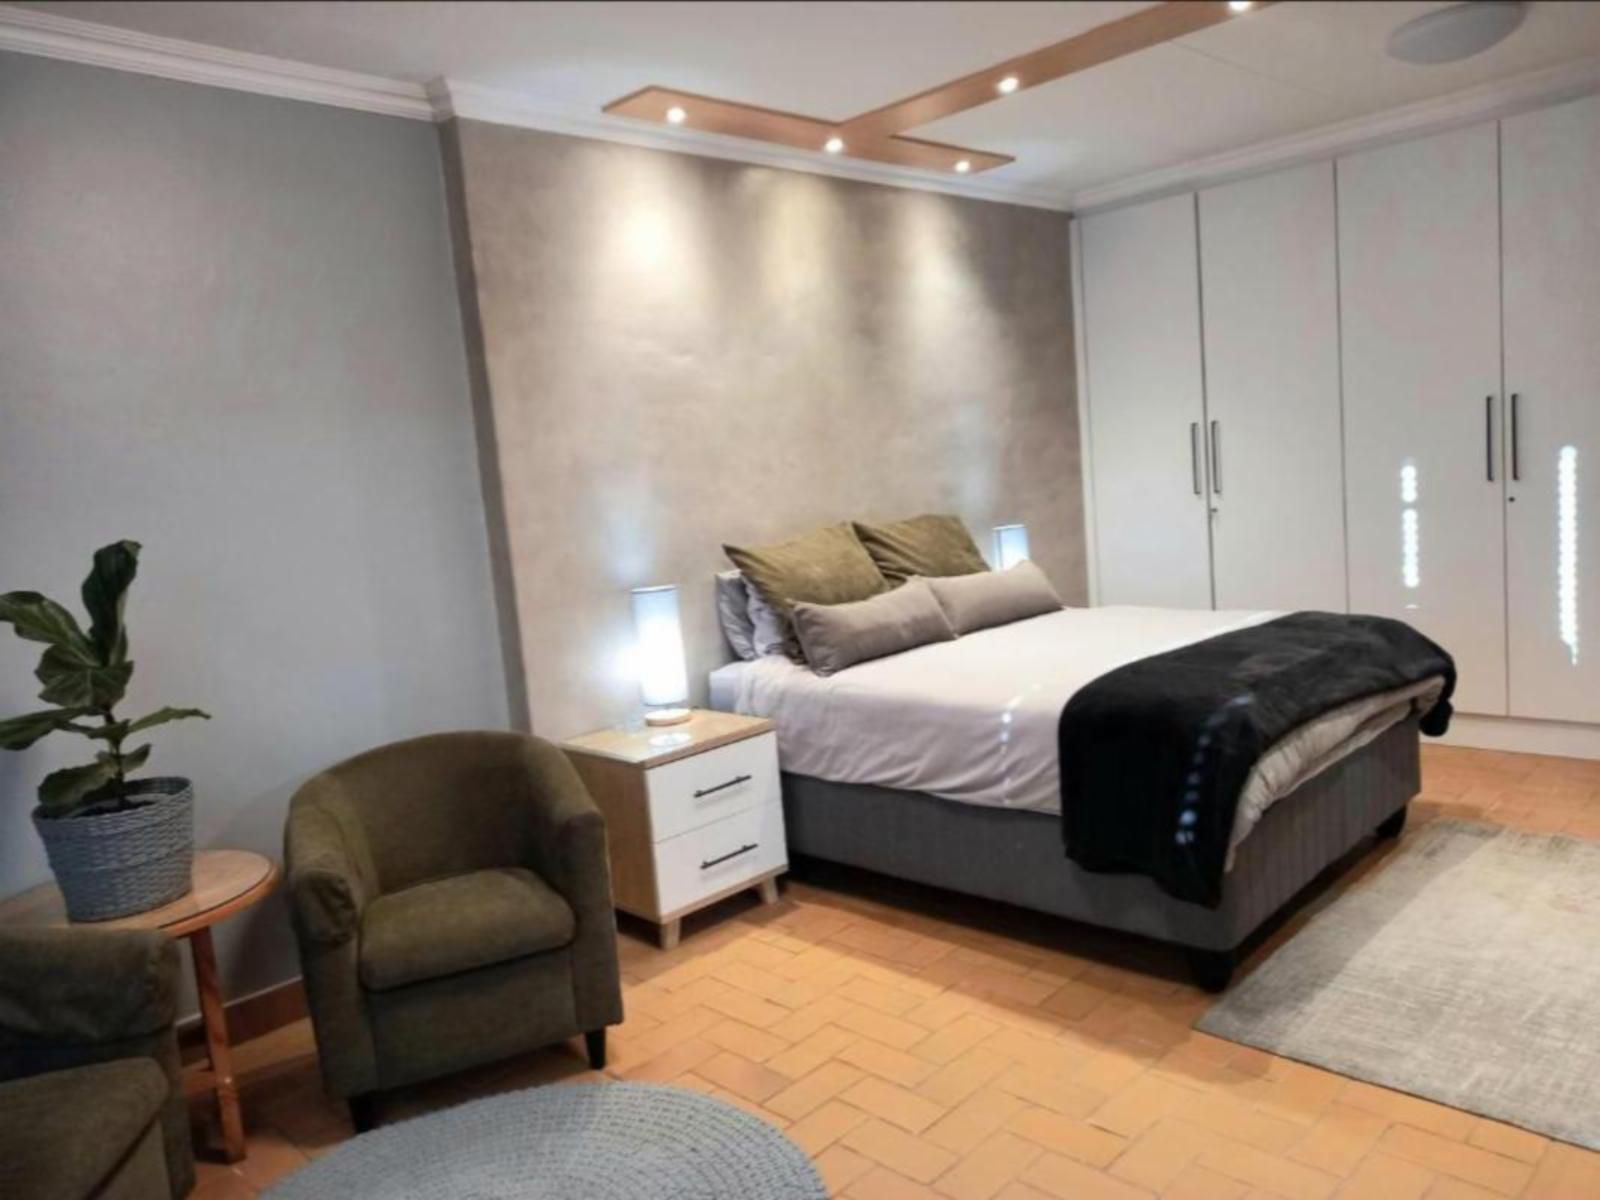 Le Gallerie Luxury Accommodation Graskop Graskop Mpumalanga South Africa Bedroom